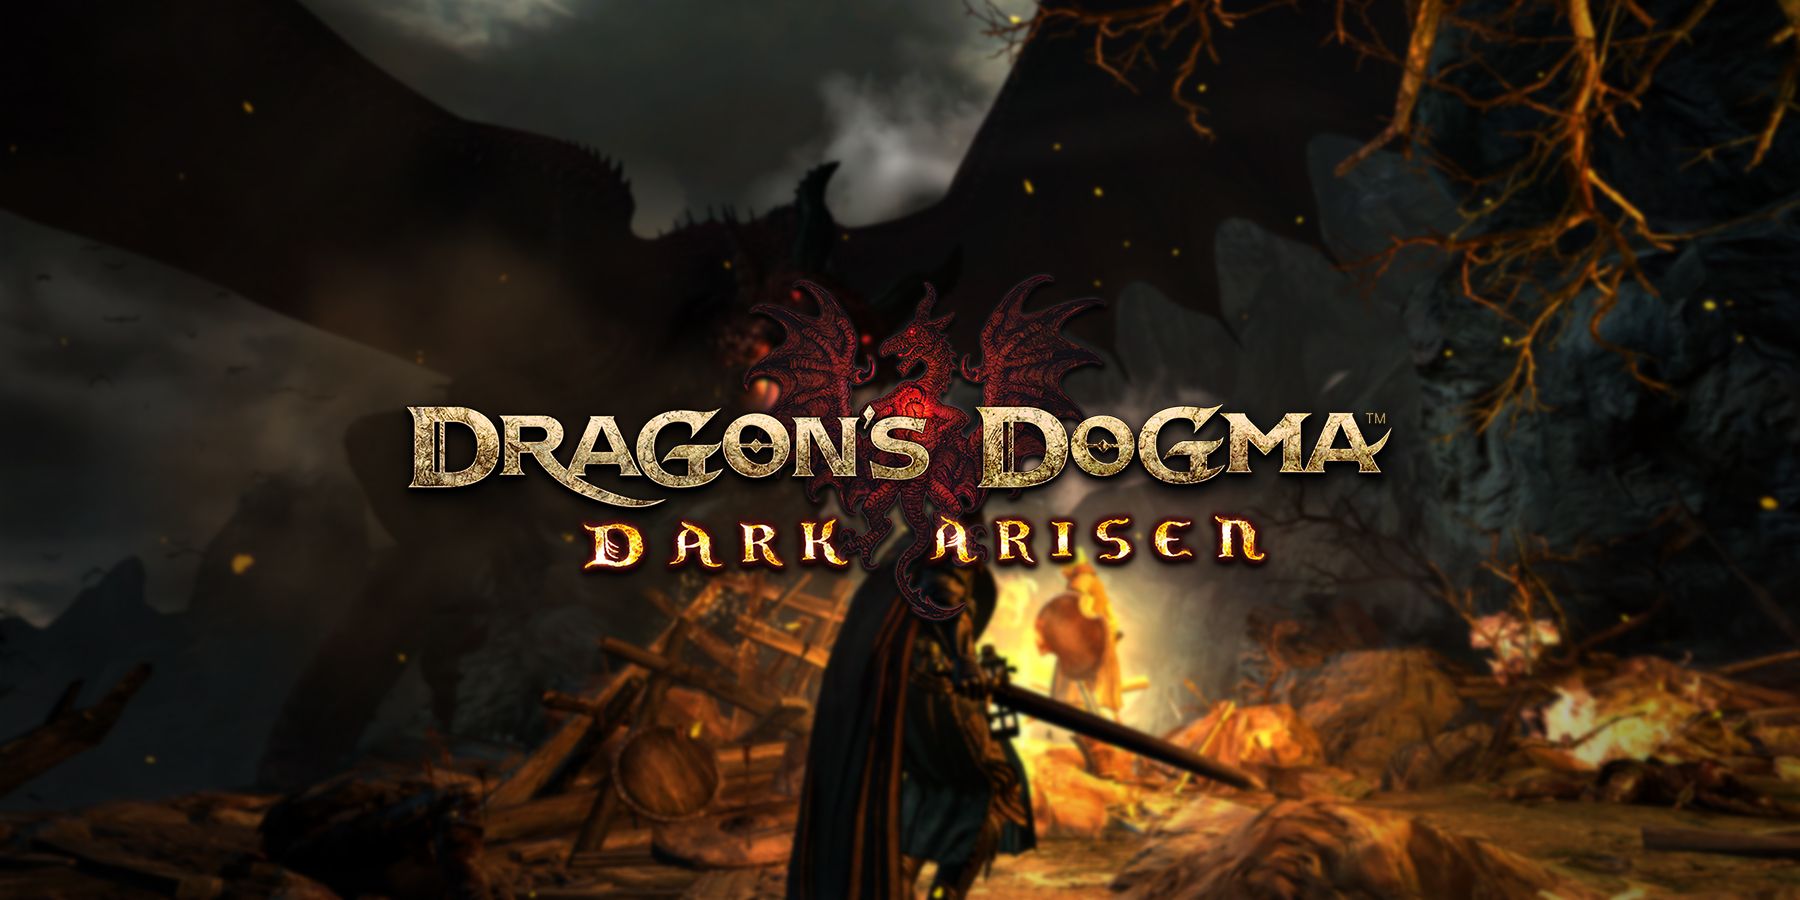 Dragon's Dogma Dark Arisen logo with player fighting dragon